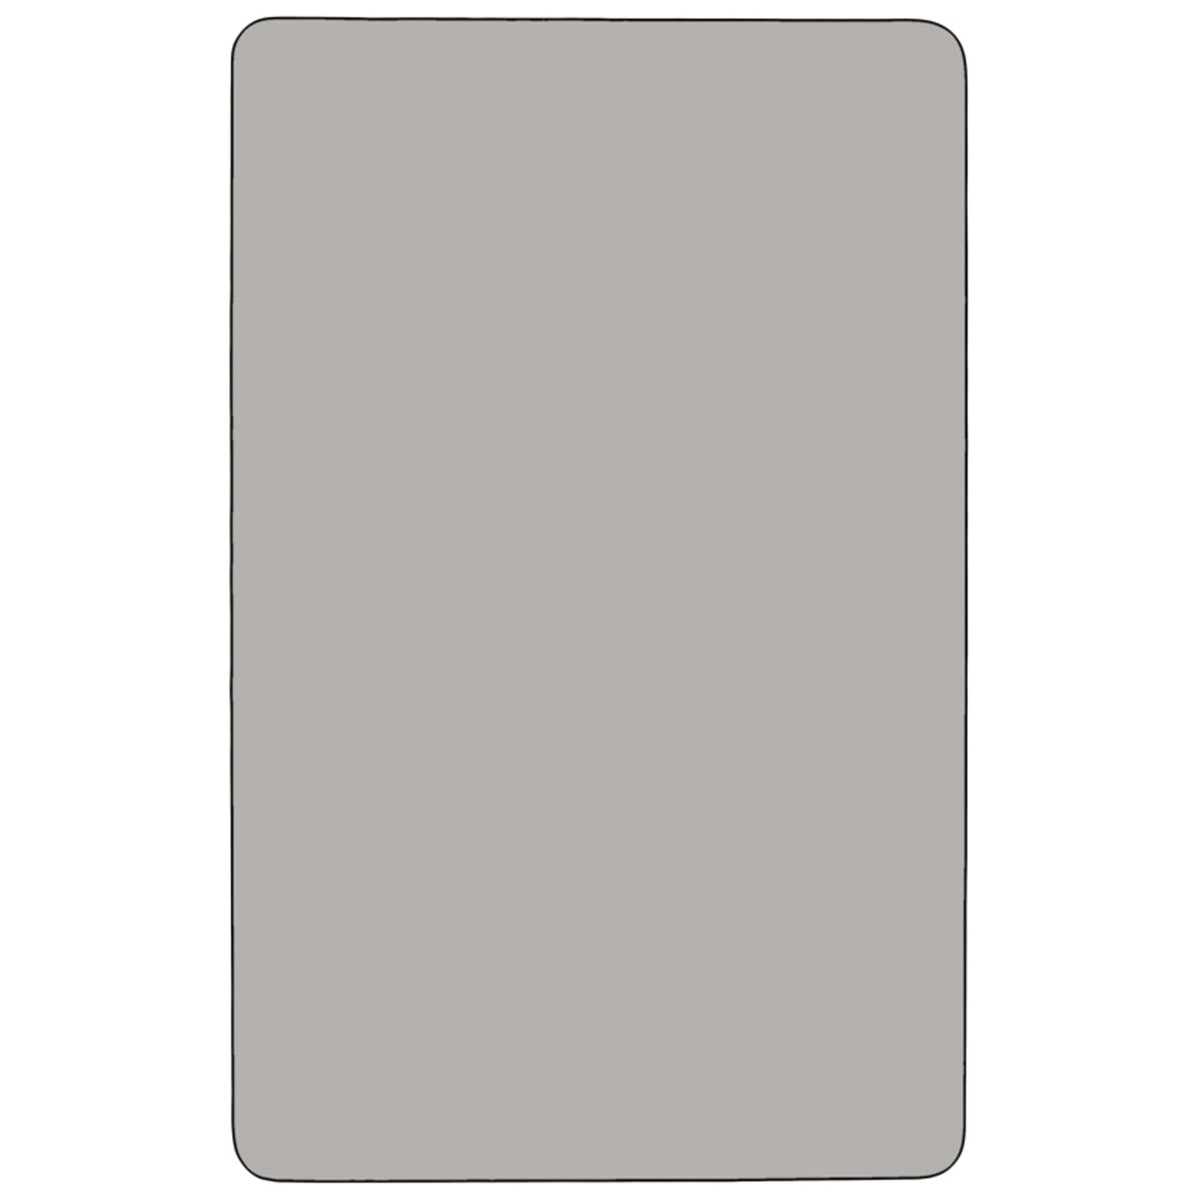 Gray |#| Mobile 30inchW x 48inchL Rectangular Grey HP Laminate Adjustable Activity Table